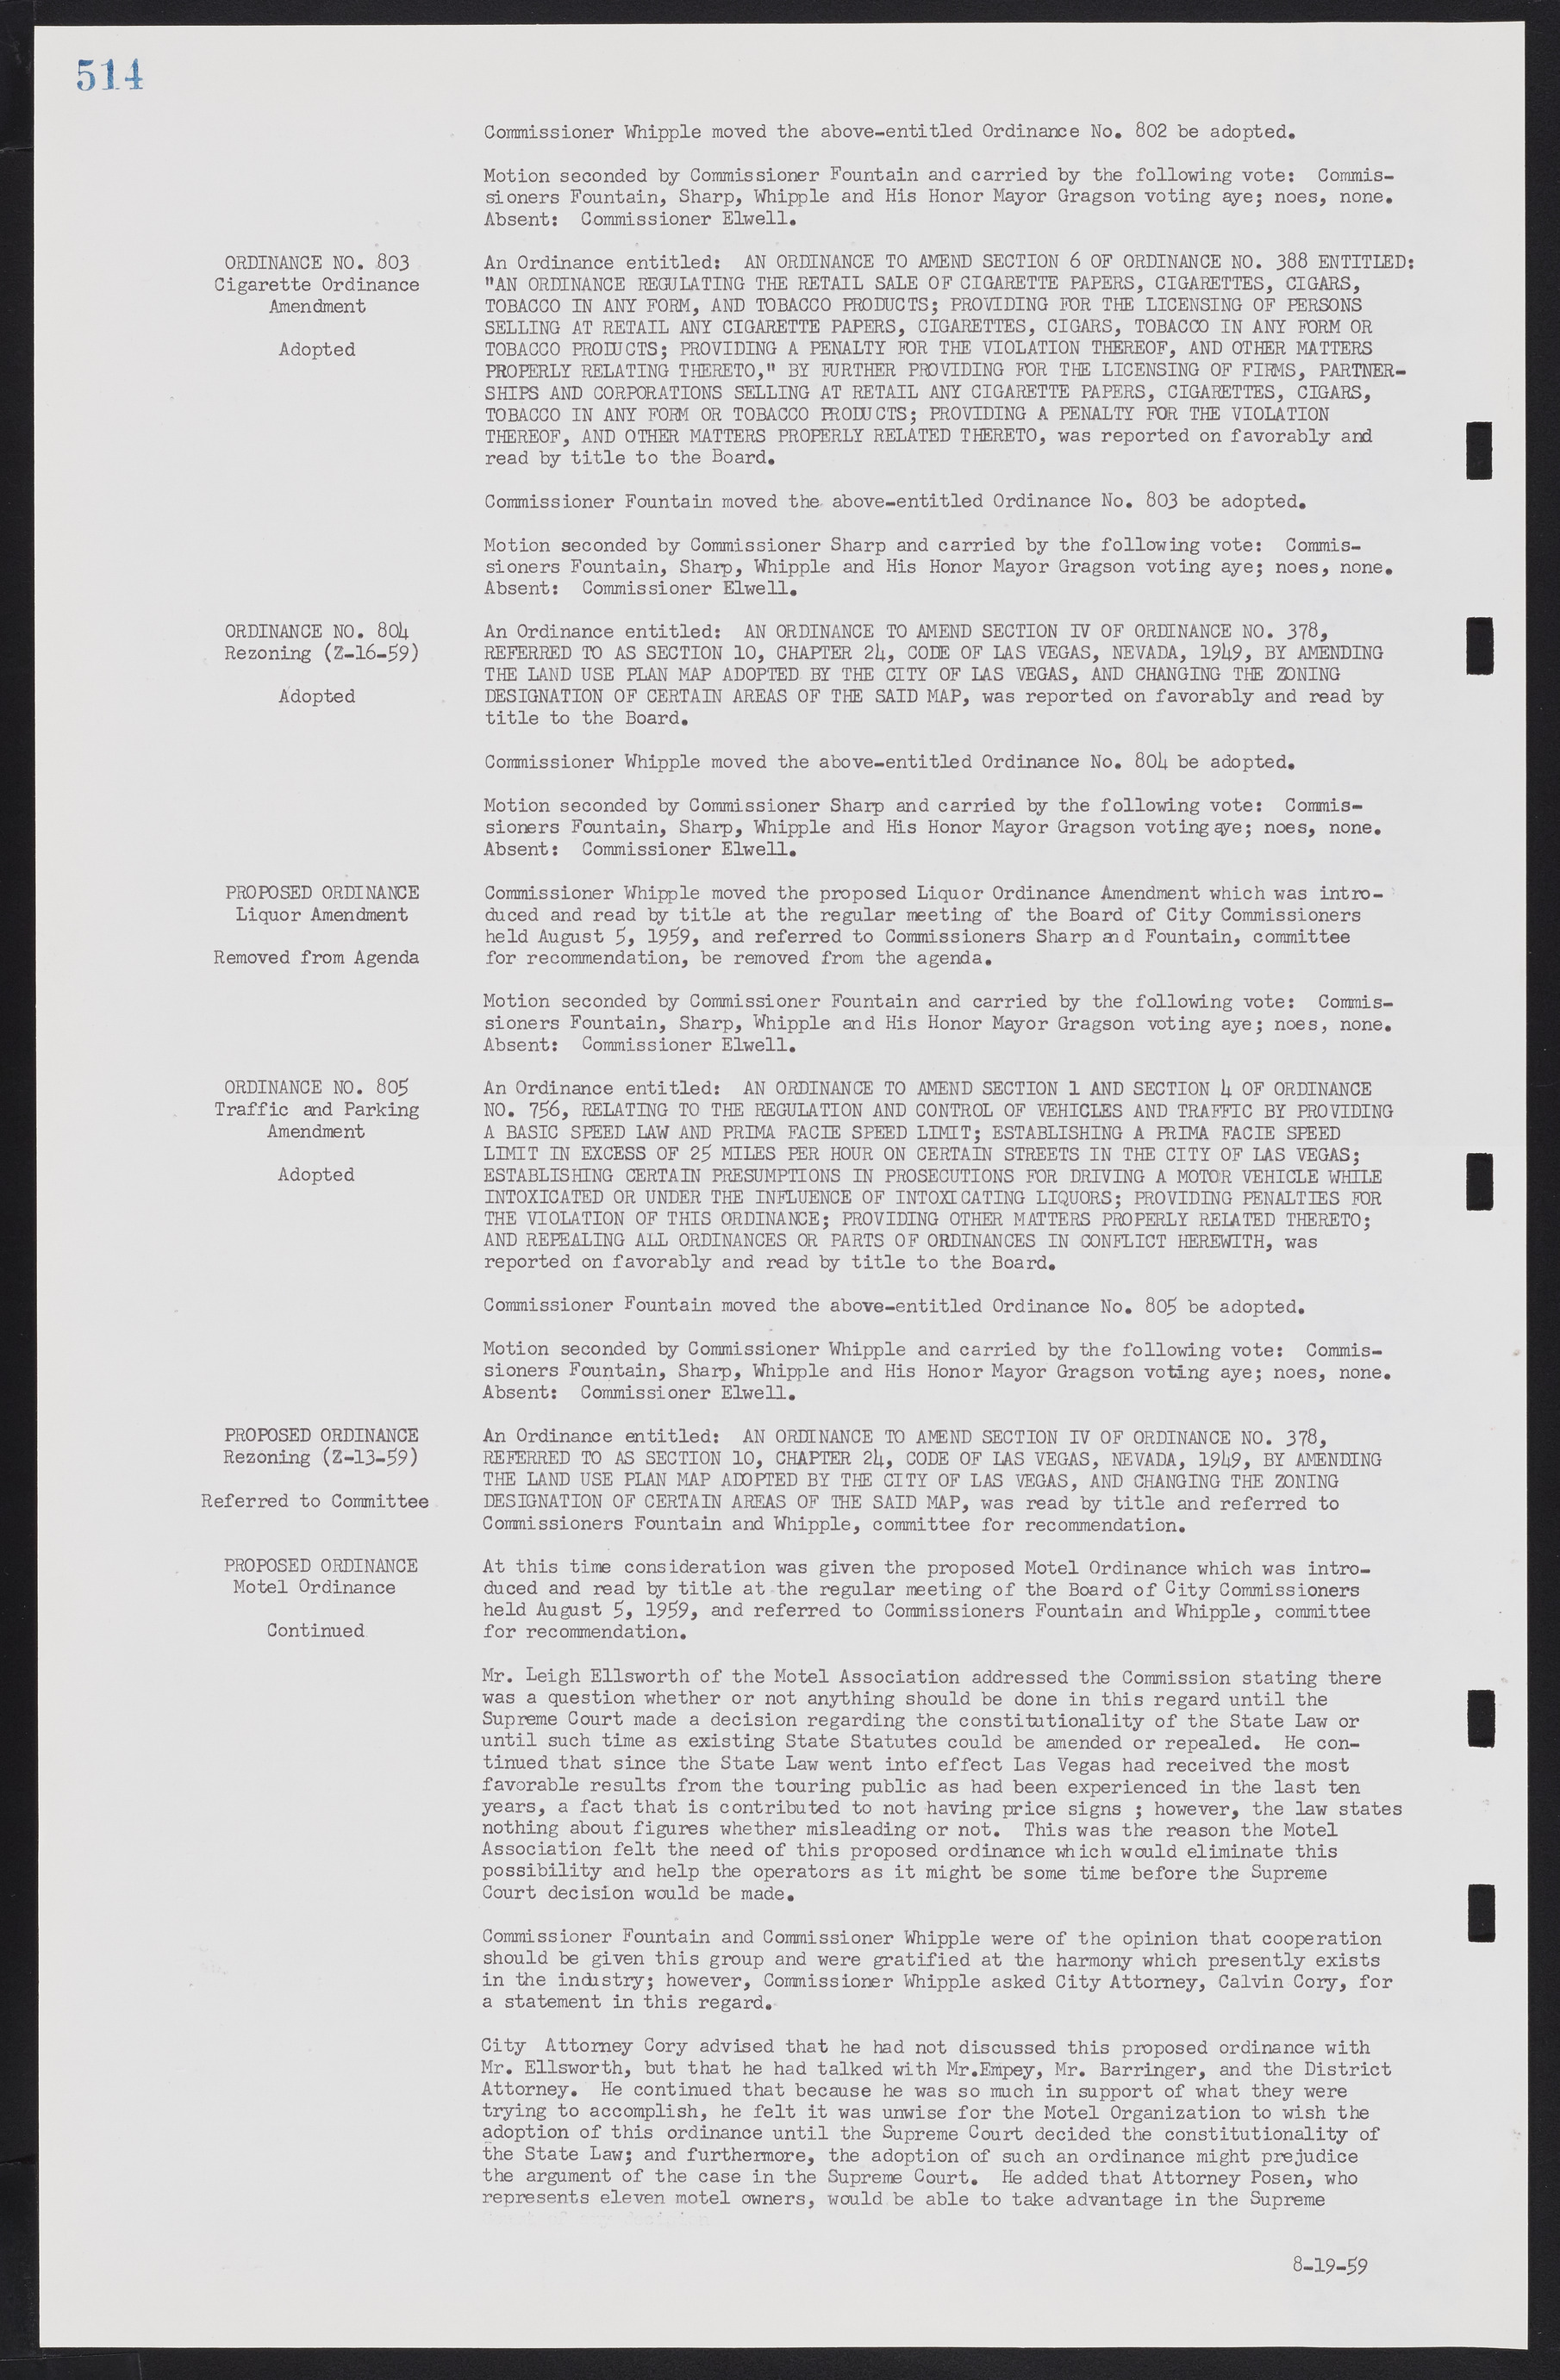 Las Vegas City Commission Minutes, November 20, 1957 to December 2, 1959, lvc000011-550